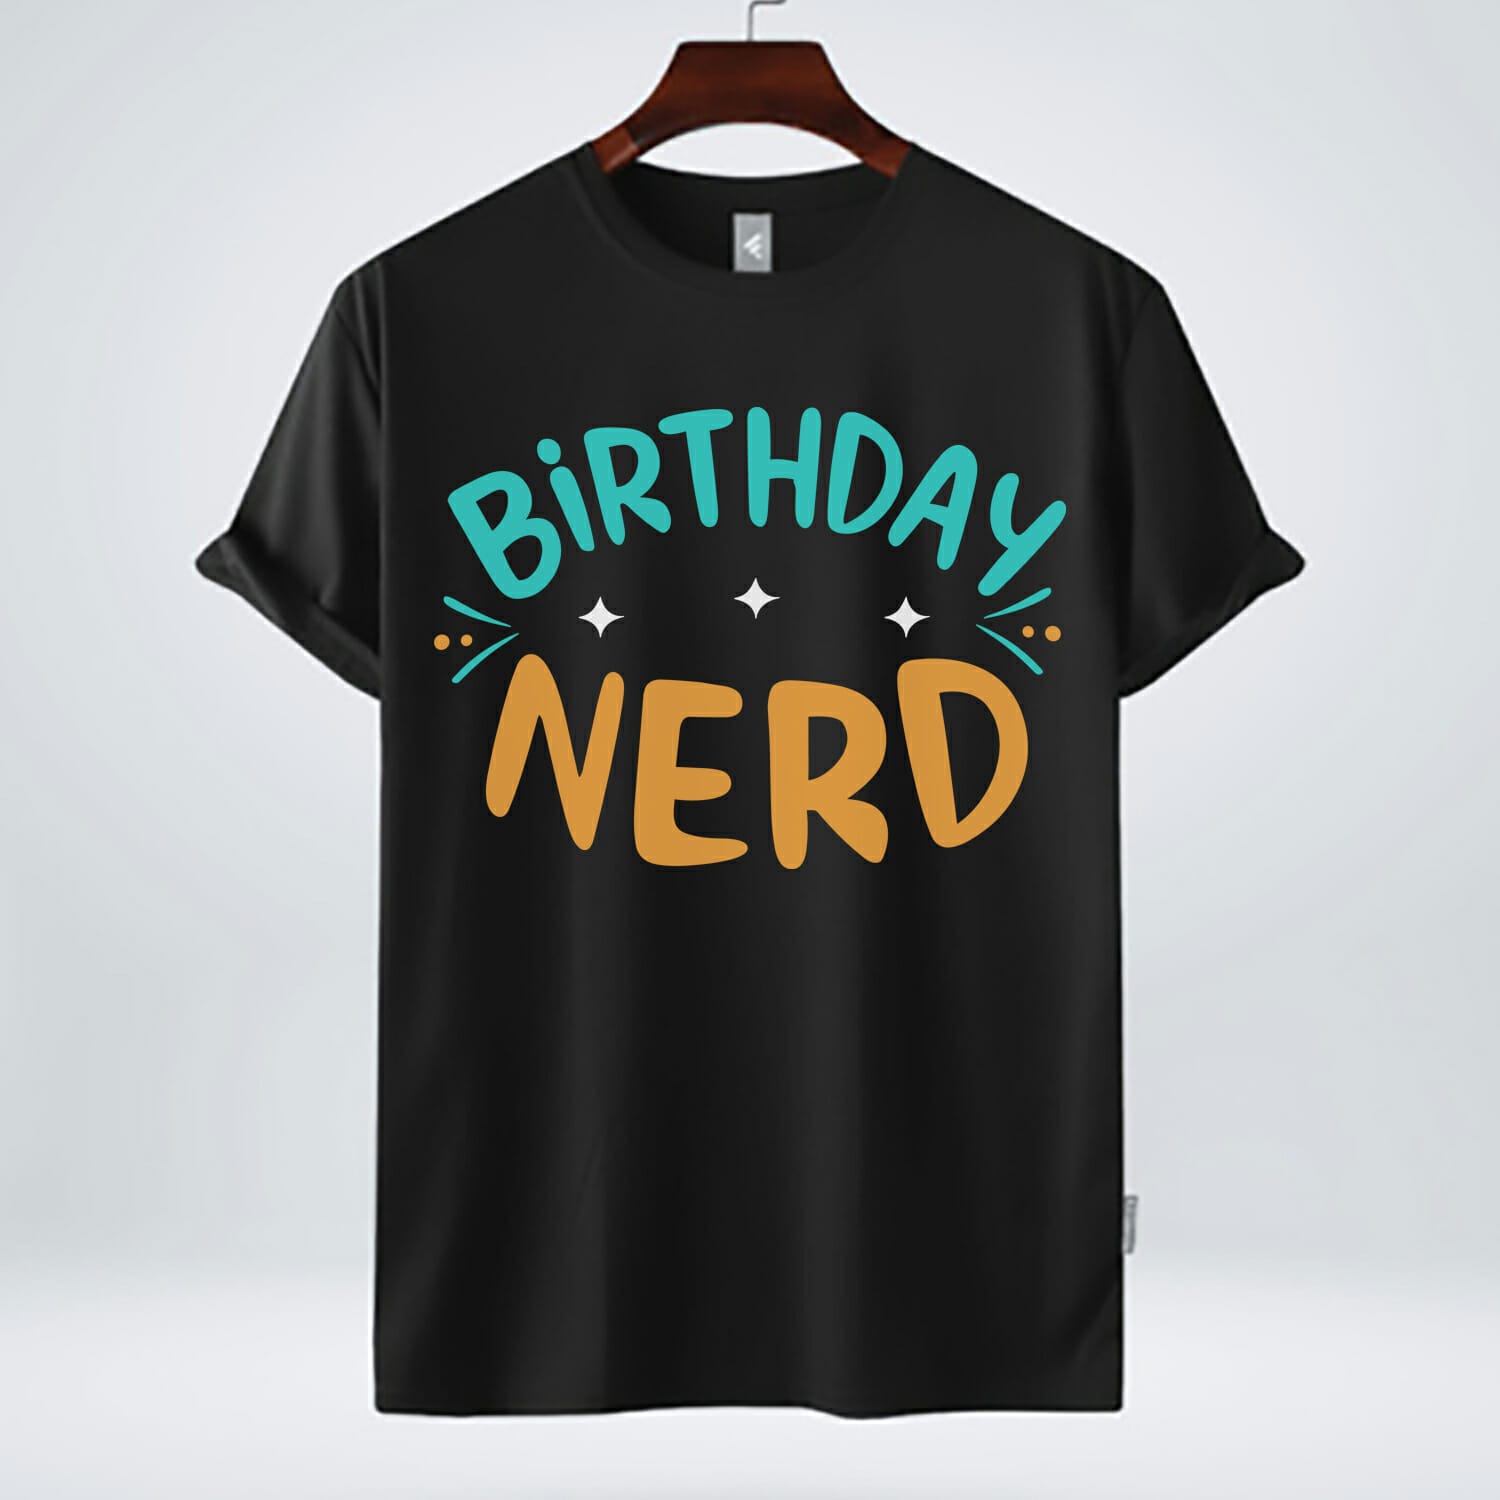 Birthday Nerd T-Shirt Design